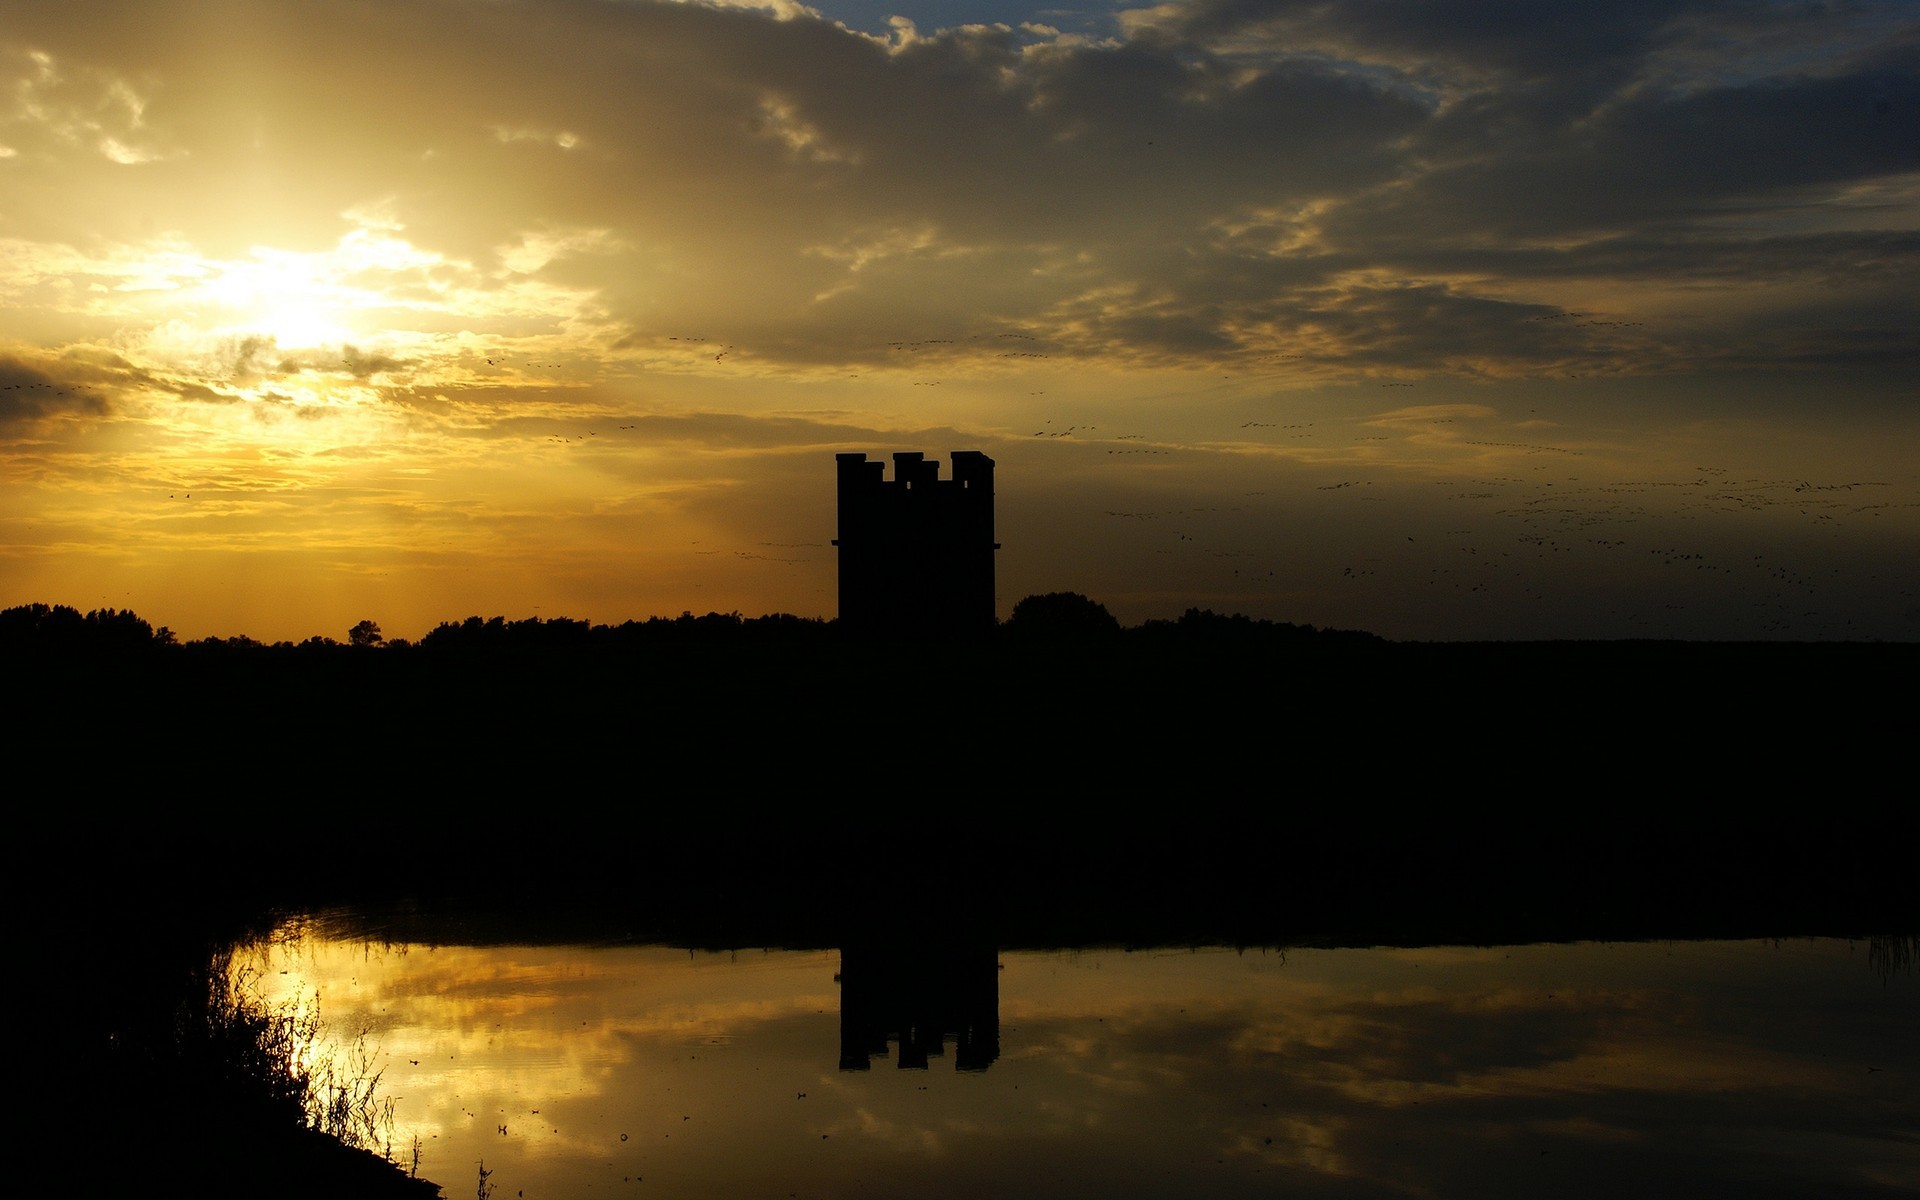 sunset, castles, rivers - desktop wallpaper